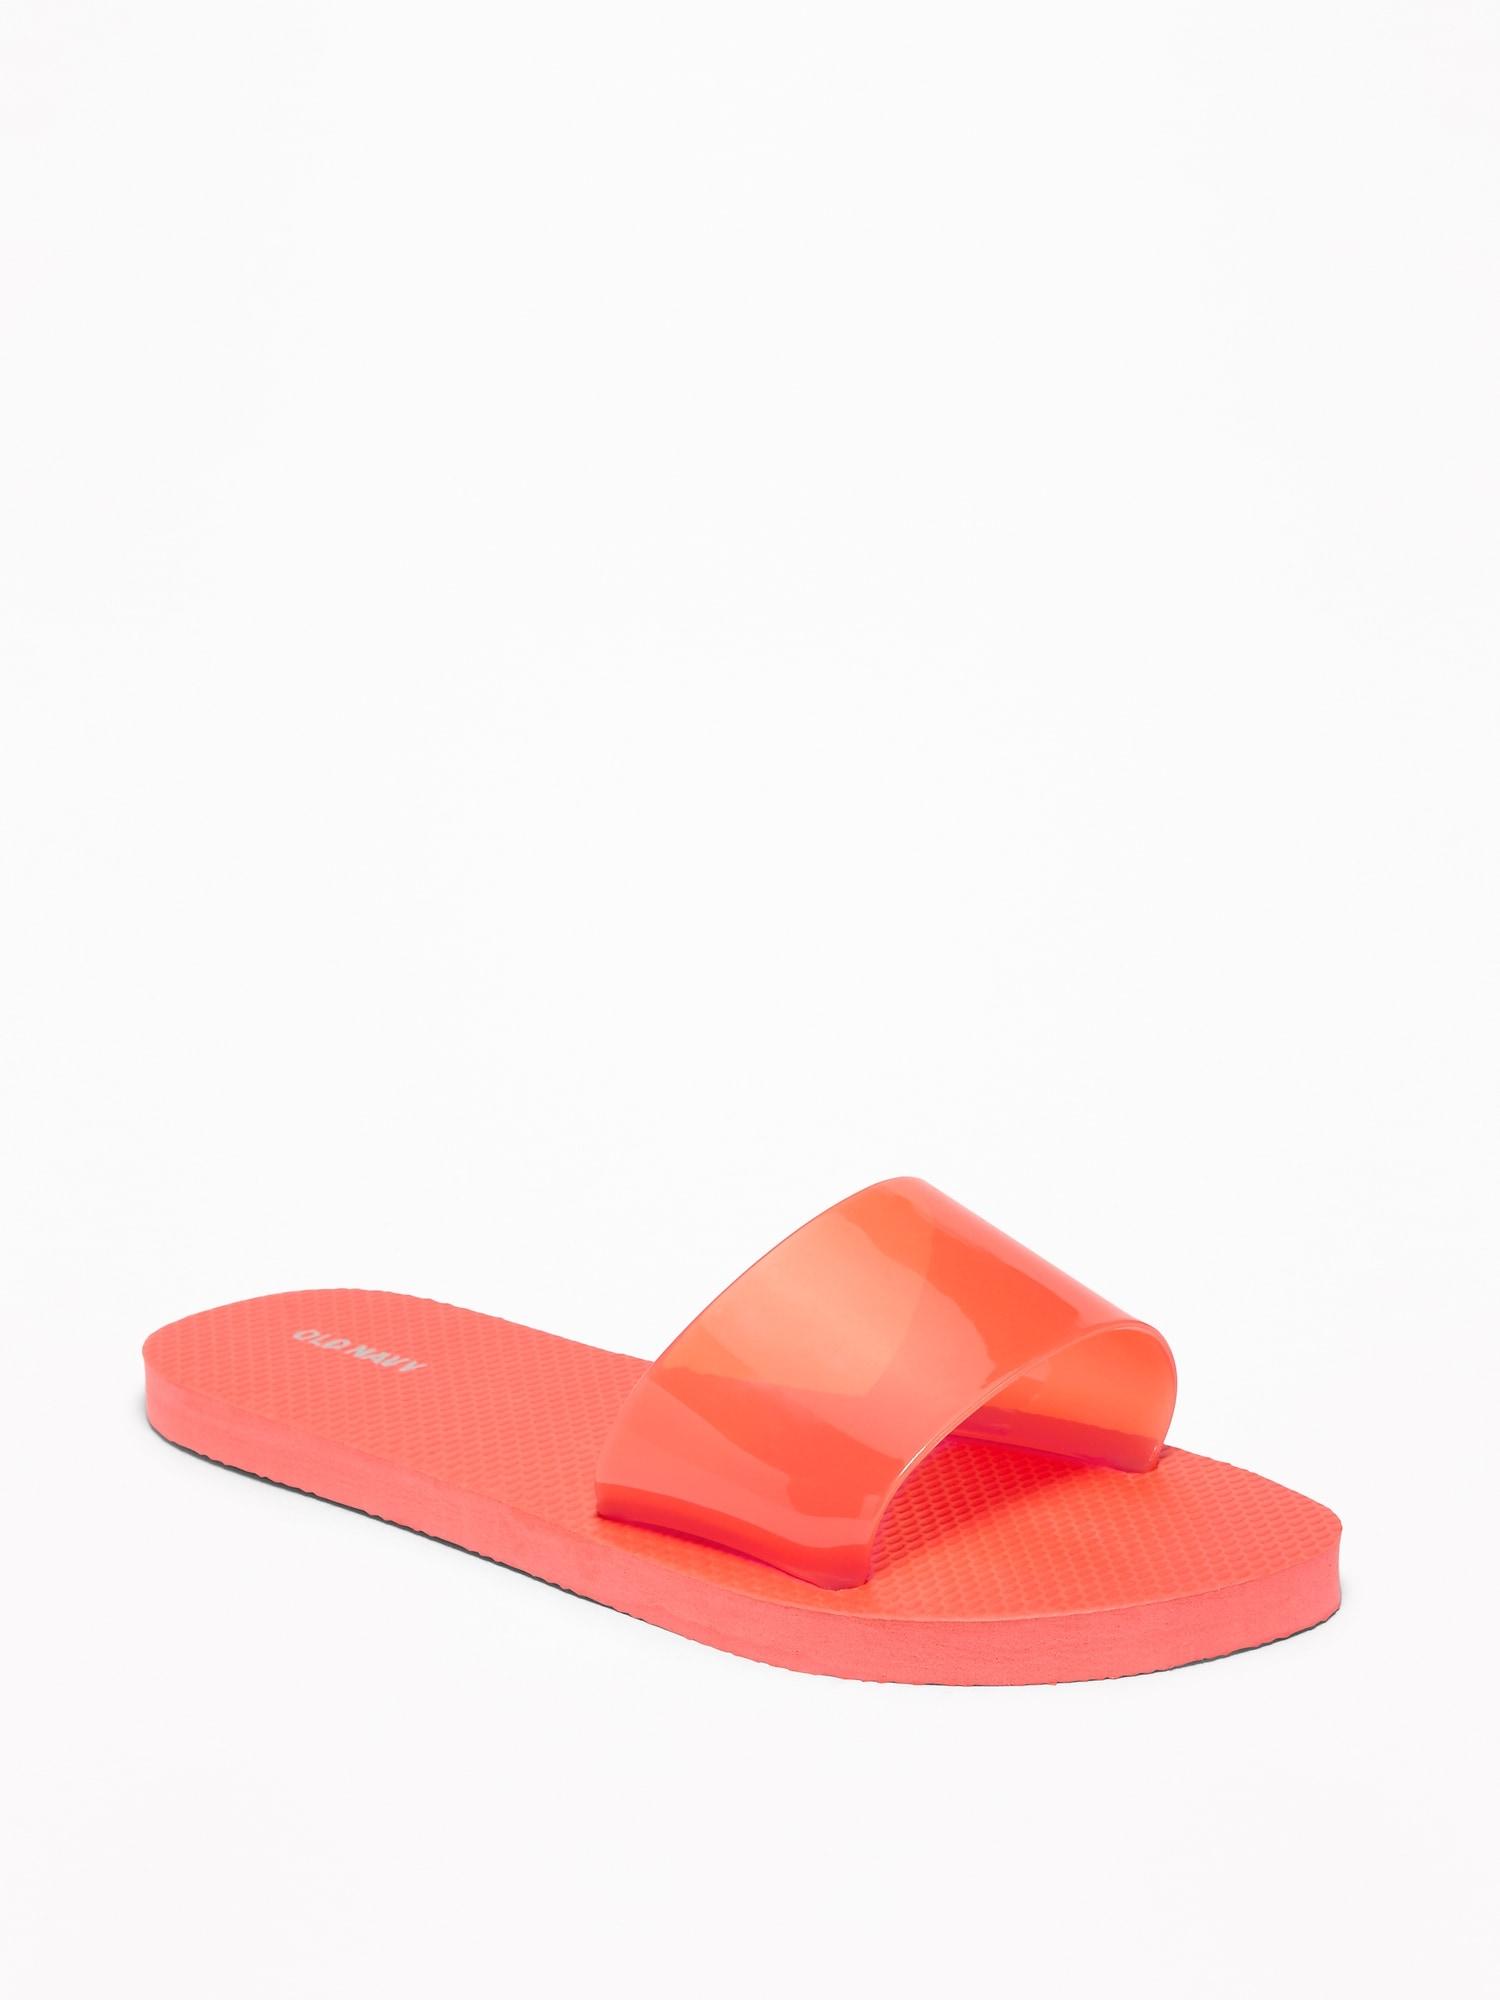 adidas women's adilette aqua slides